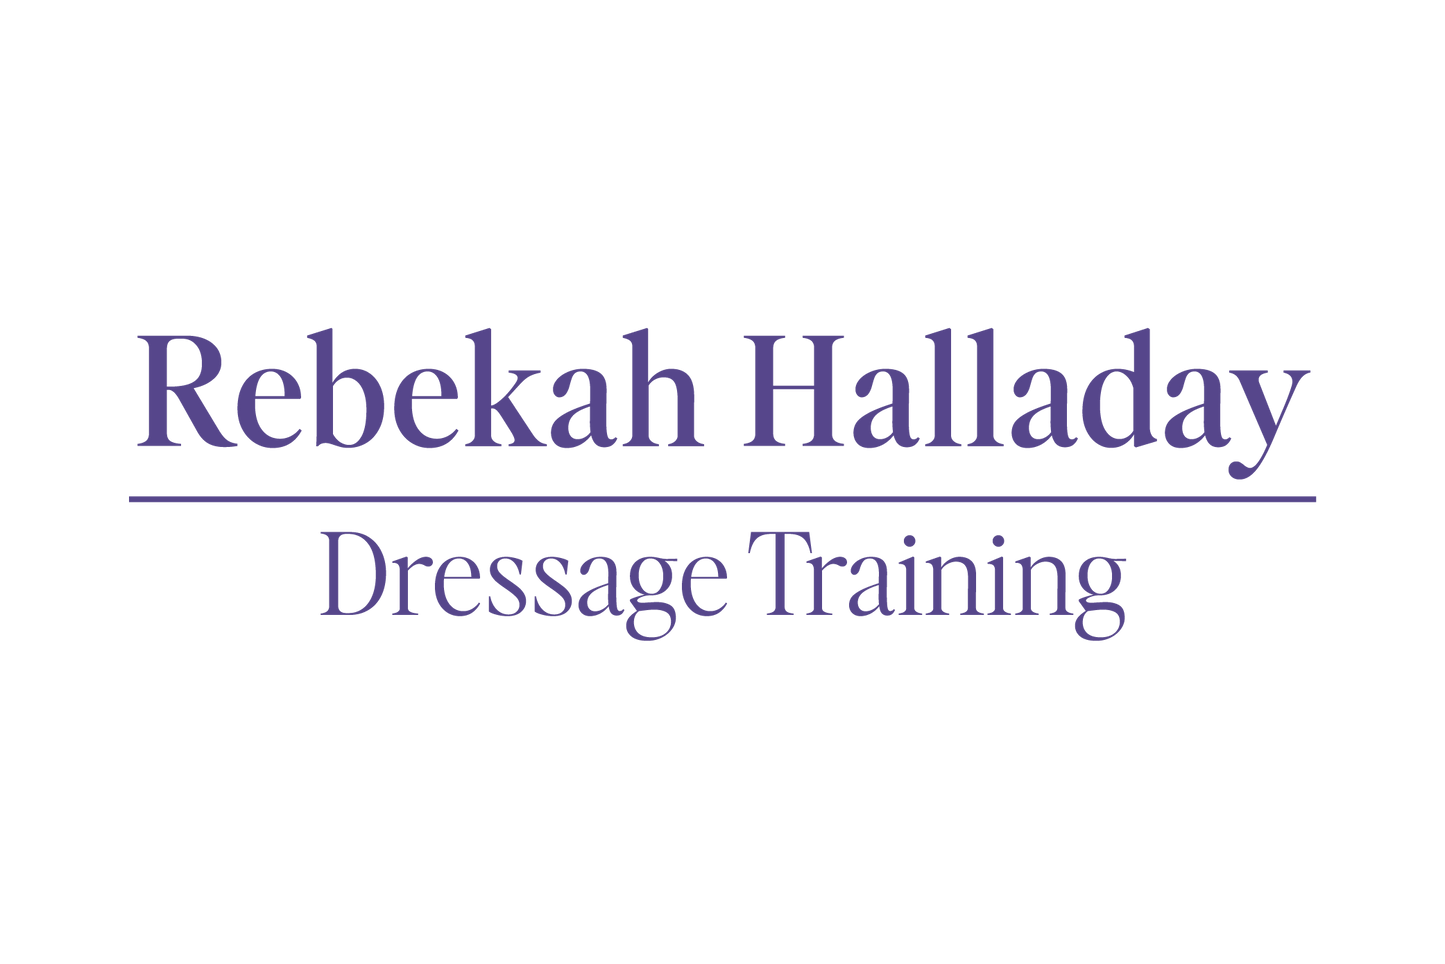 Rebekah Halladay Dressage Training